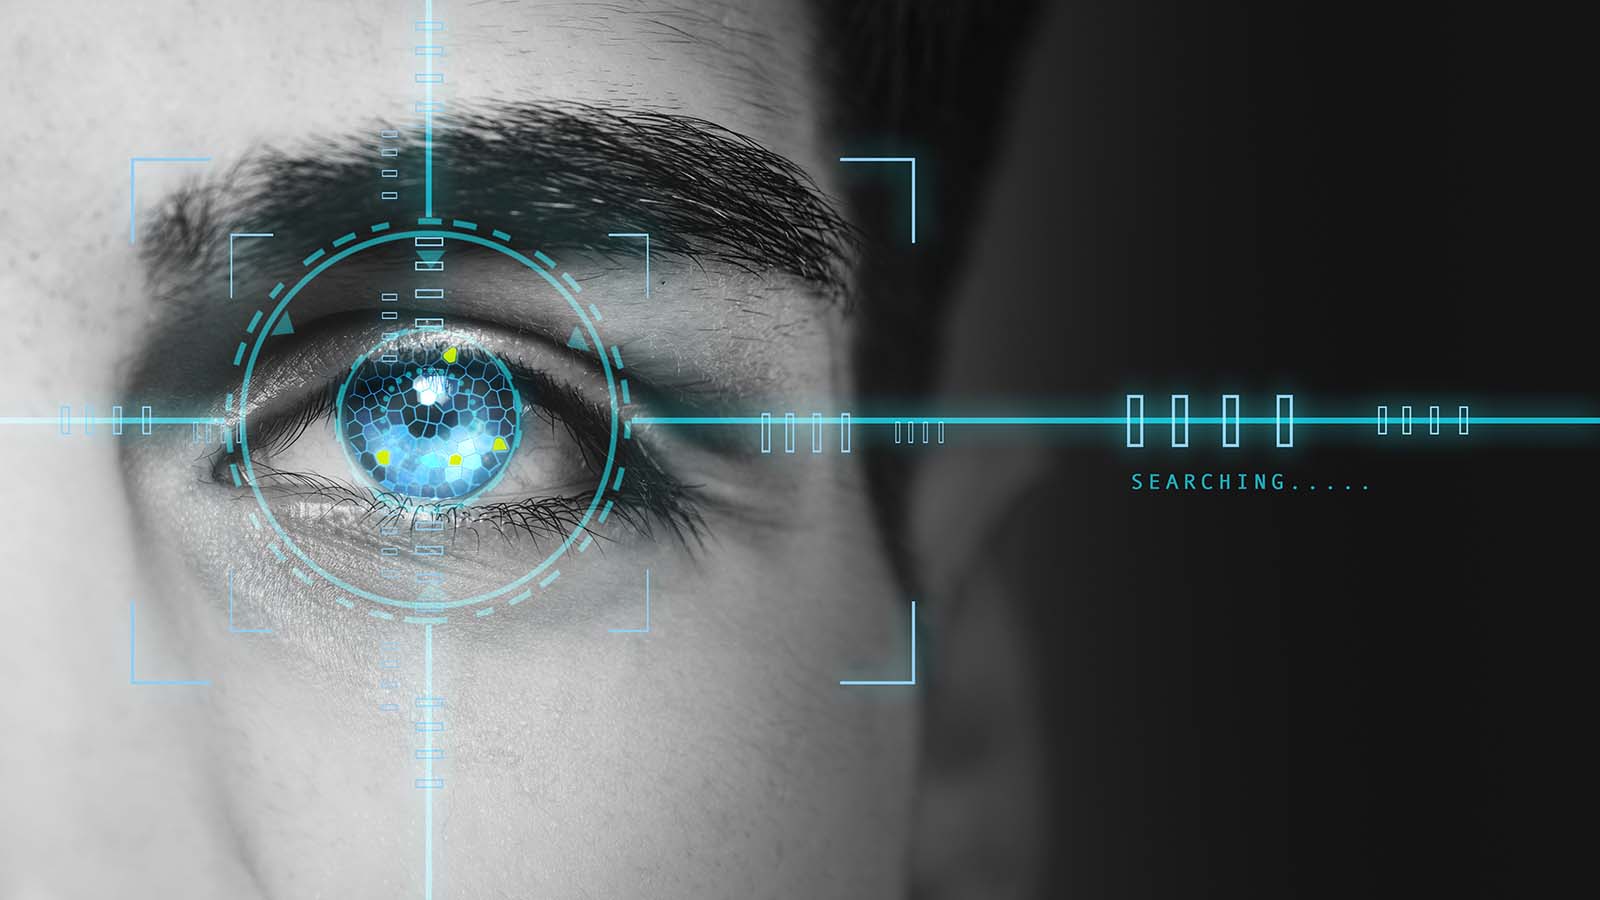 an artistic representation of a biometric scan of an eye